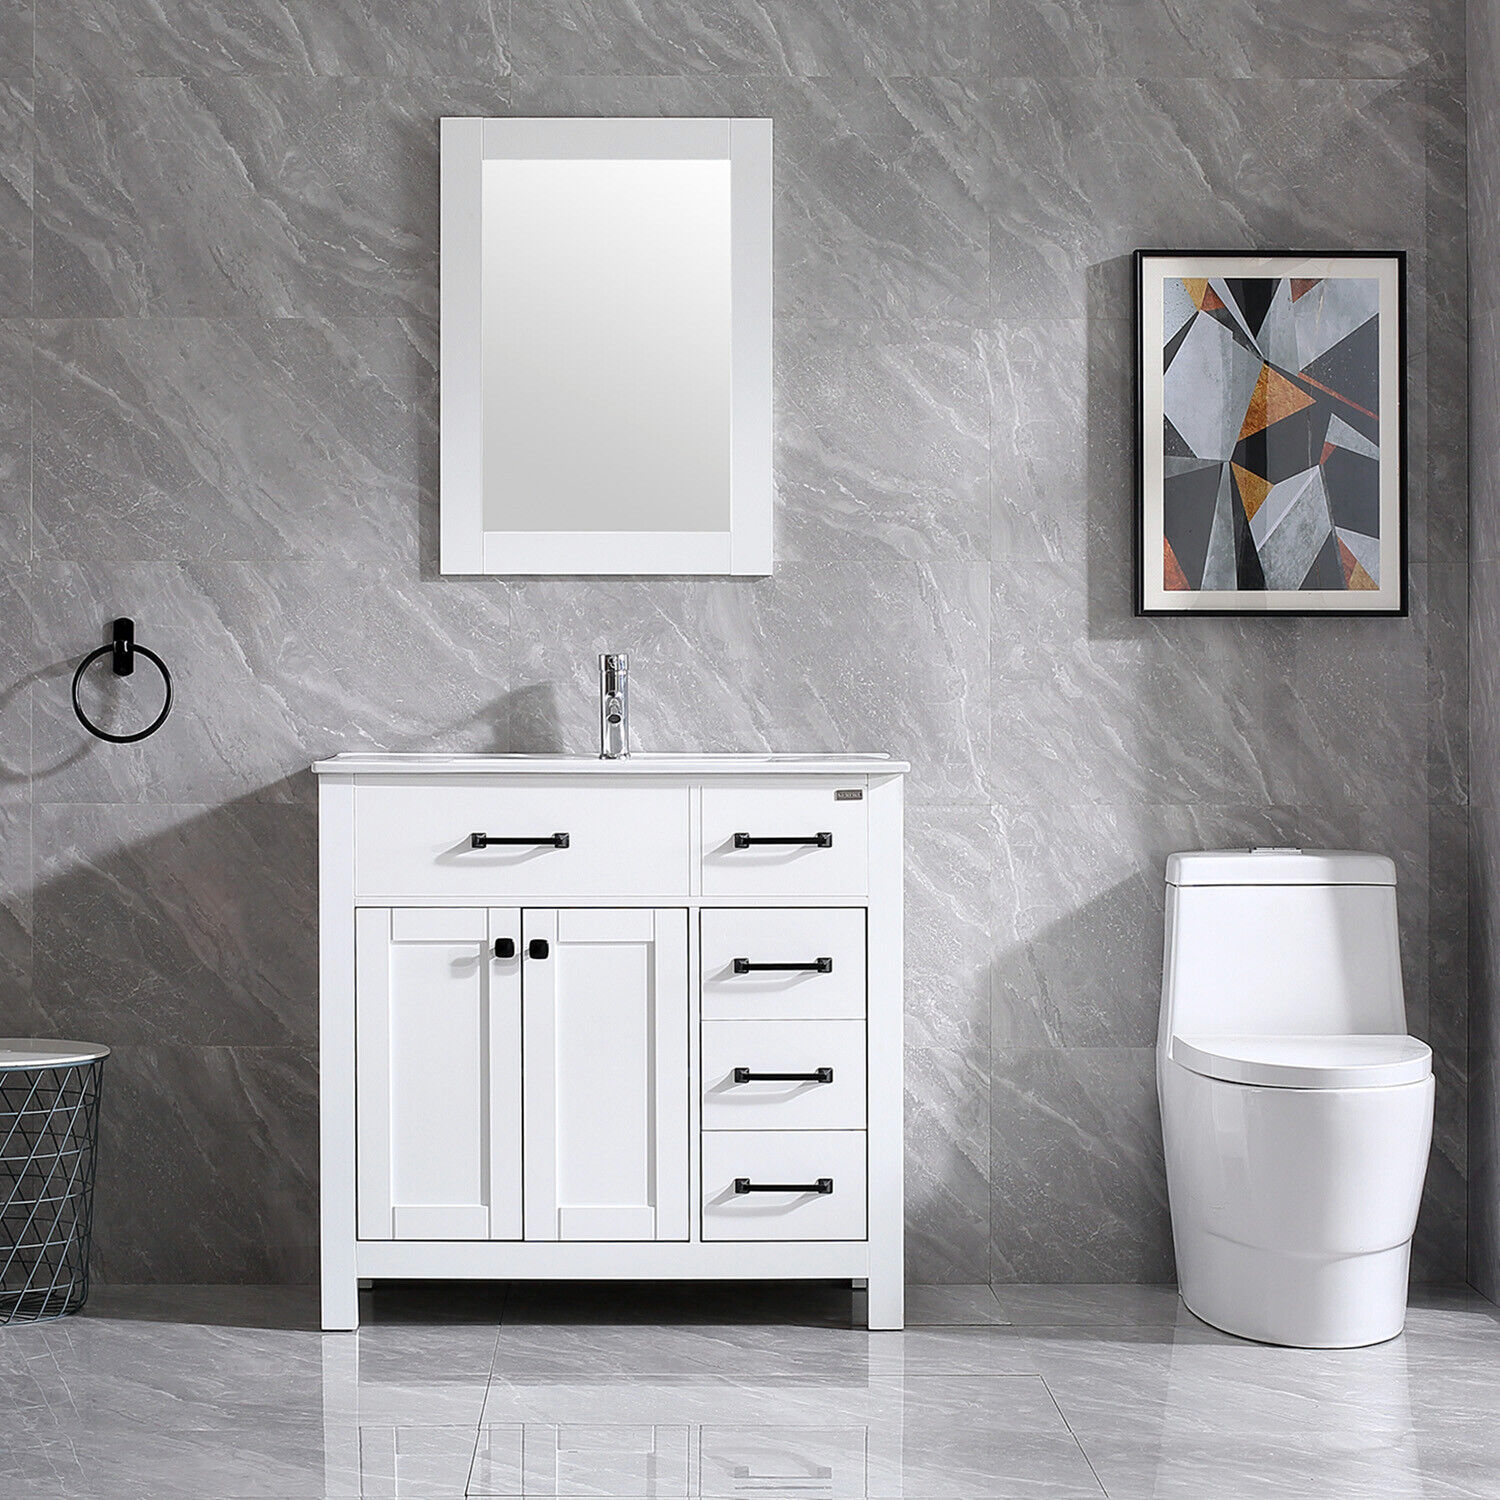 36" Bathroom Vanity Cabinet Ceramic Sink Undermount W/Faucet Drain Mirror White